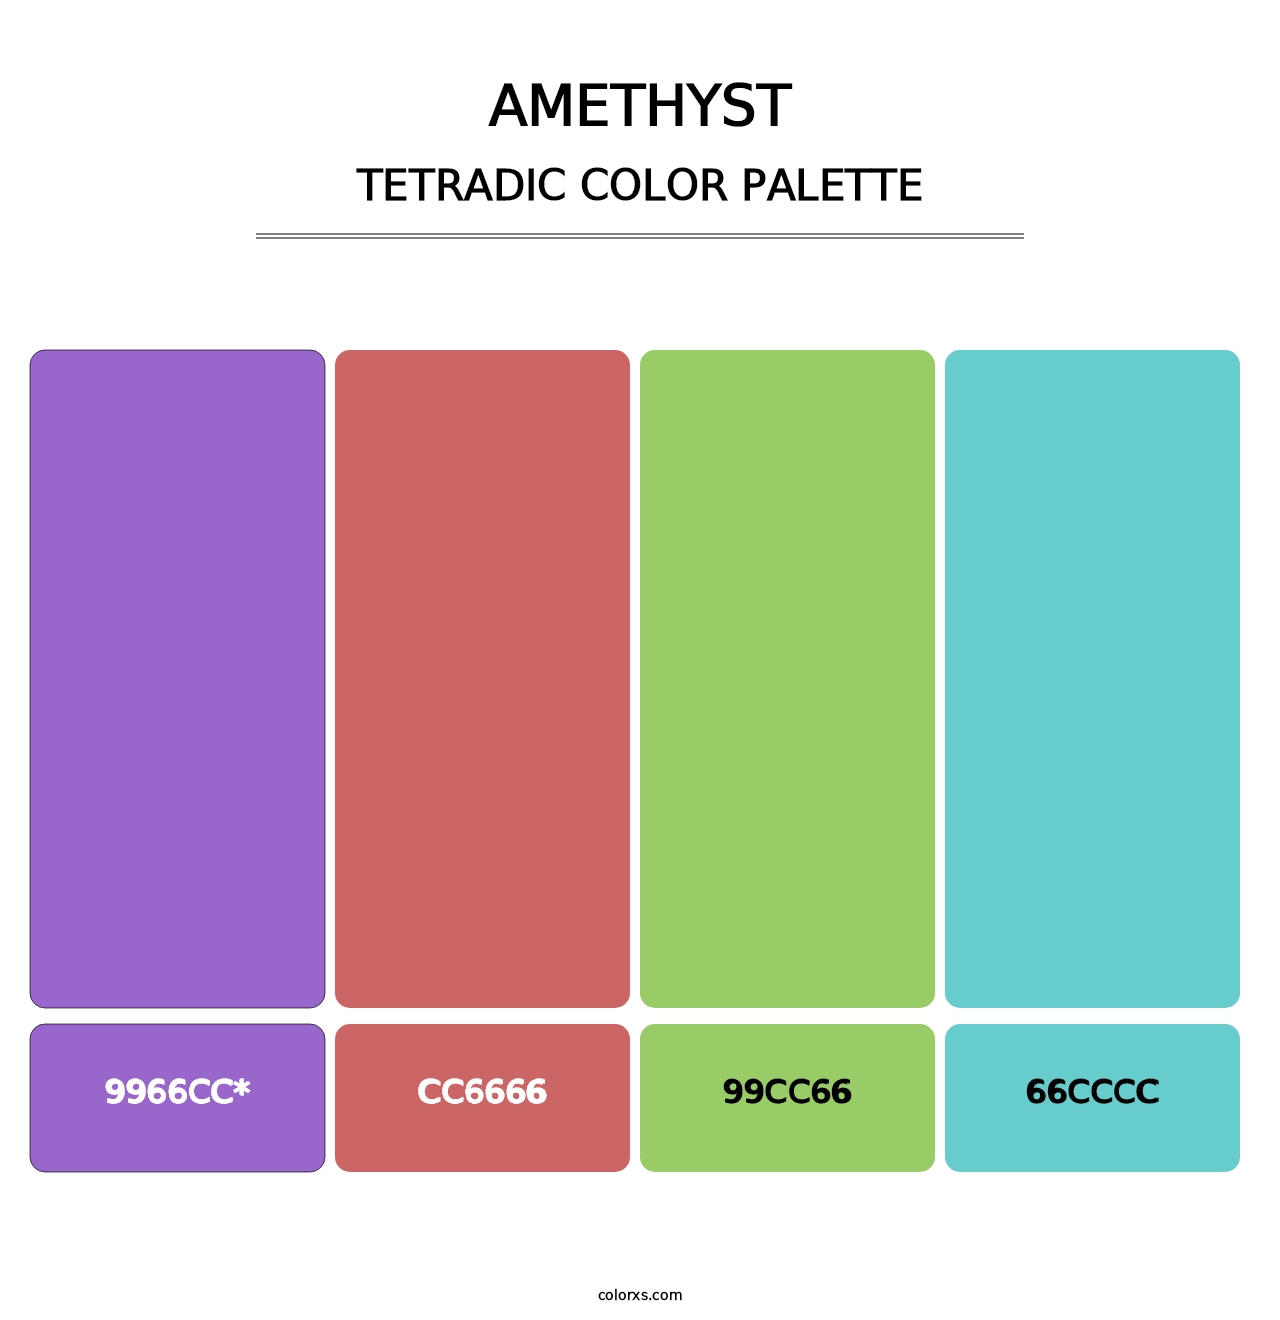 Amethyst - Tetradic Color Palette